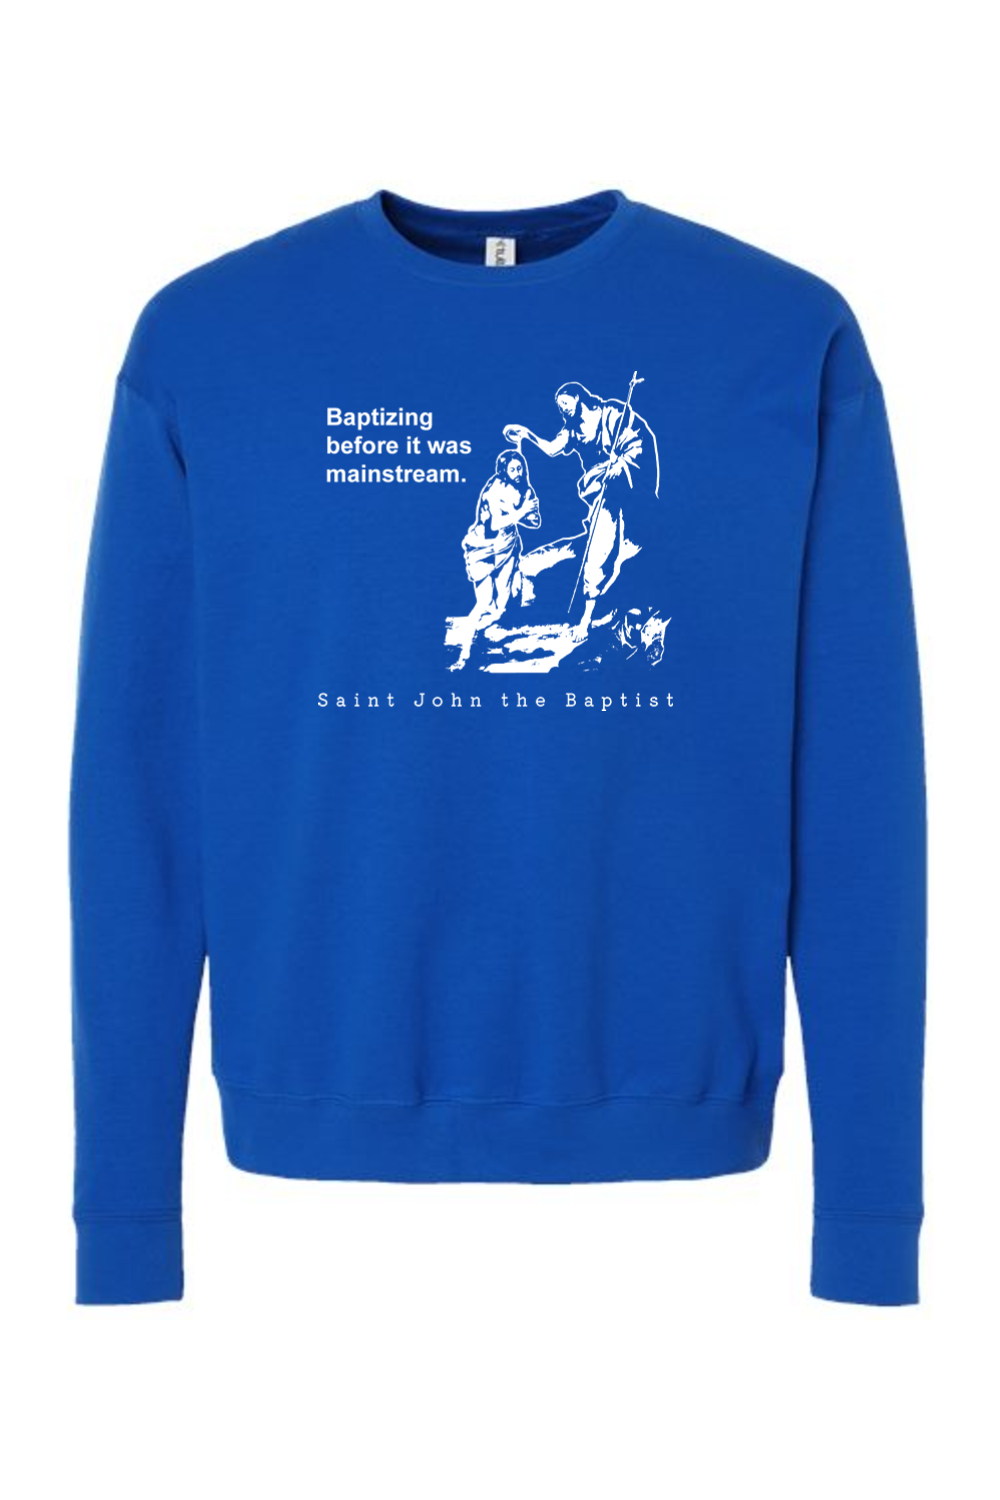 Mainstream - St. John the Baptist Crewneck Sweatshirt